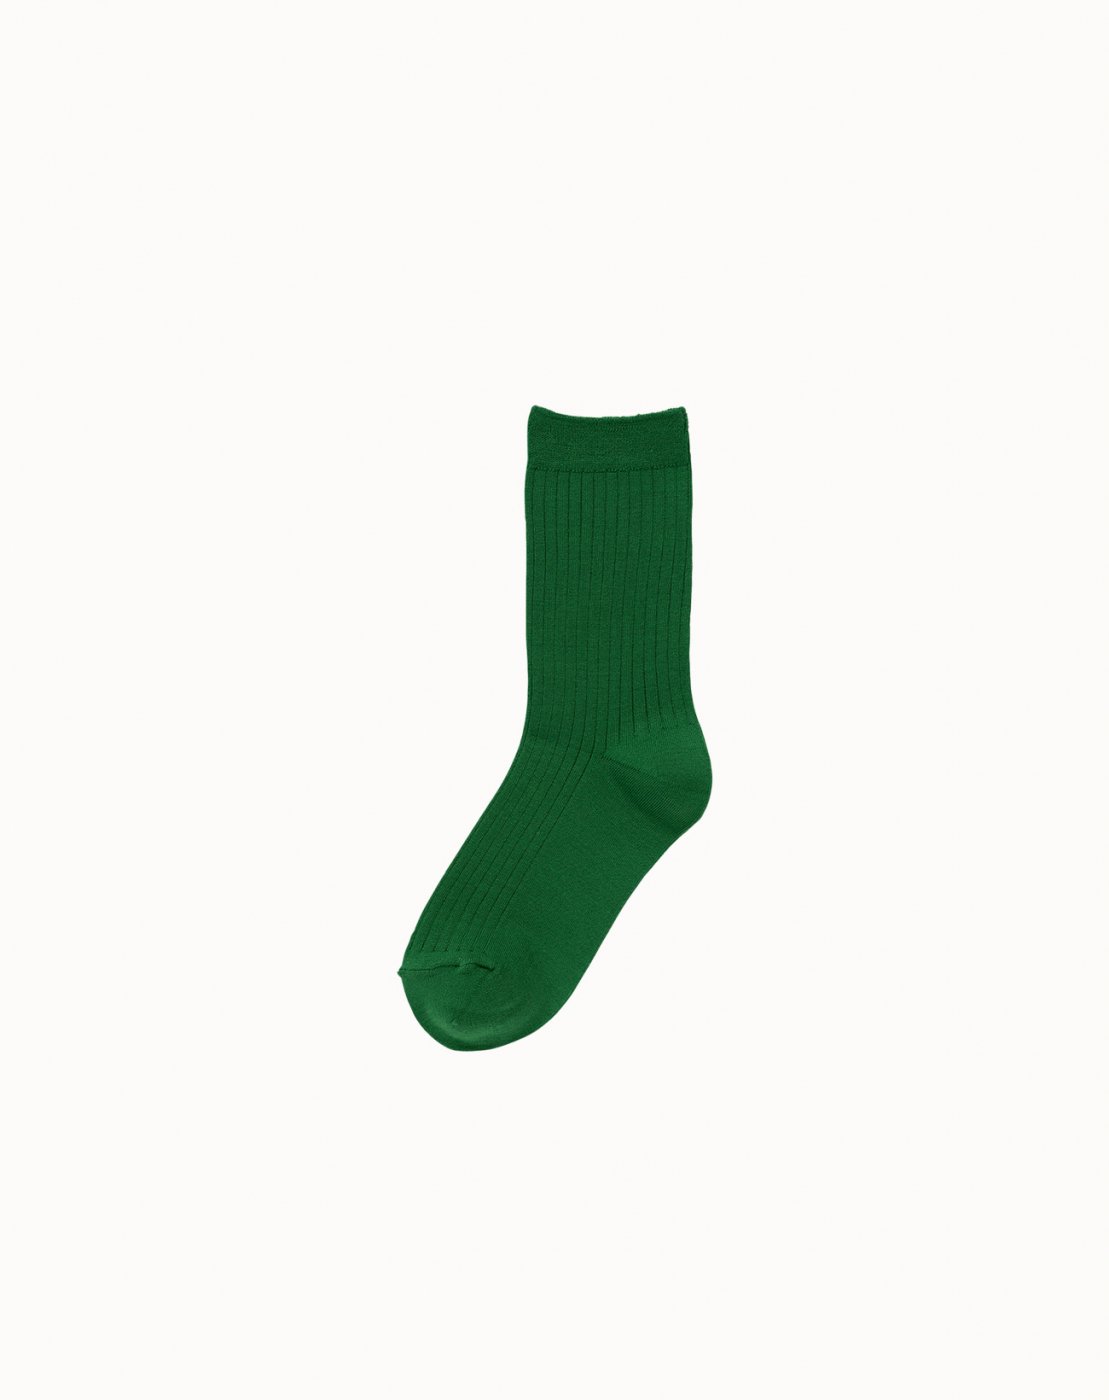 leur logette - Silk Rib Socks - Leaf Green